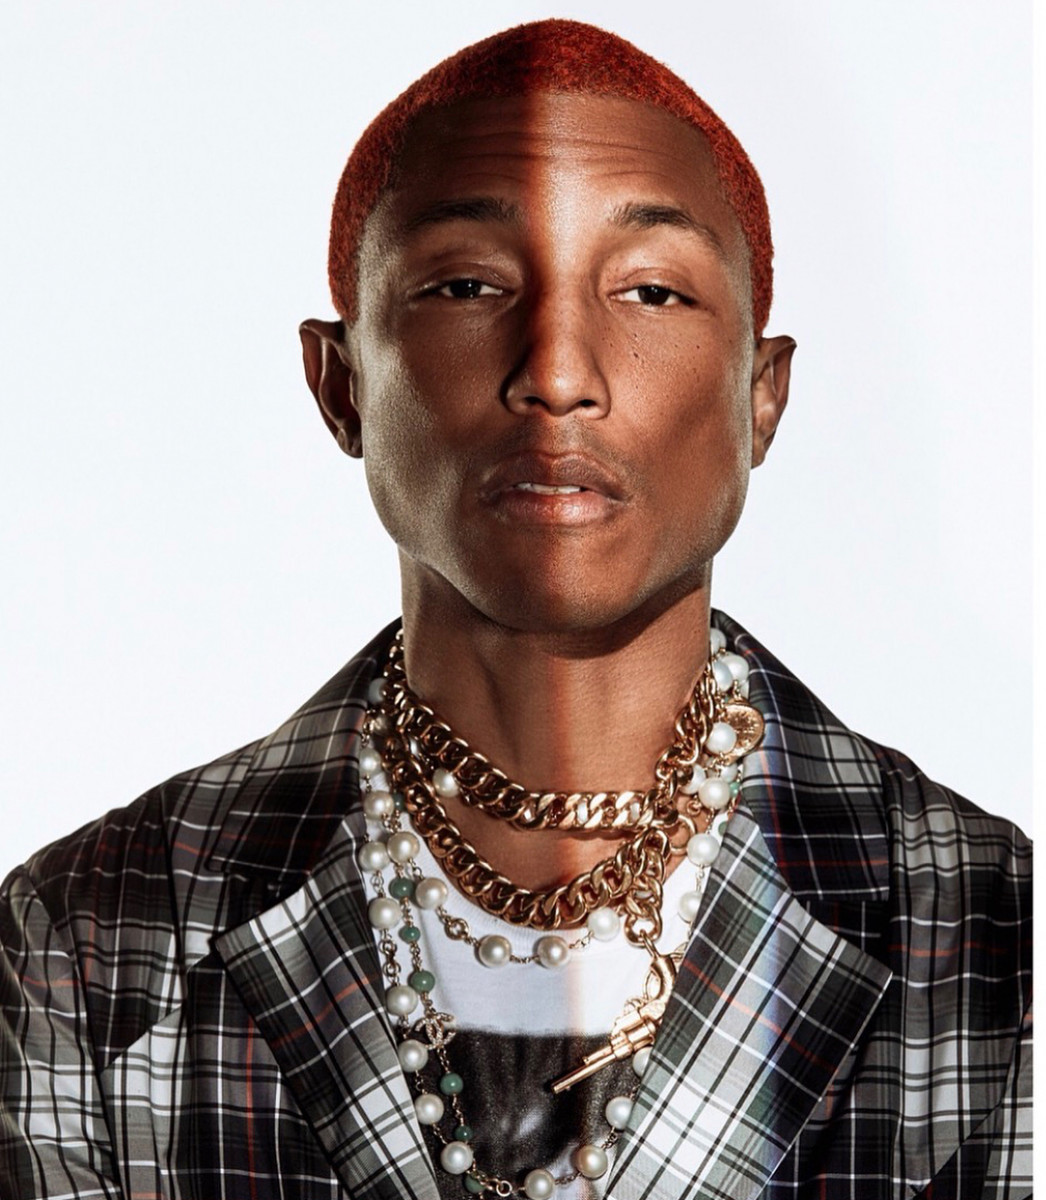 Pharrell Williams photo 127 of 136 pics, wallpaper - photo #1325073 ...